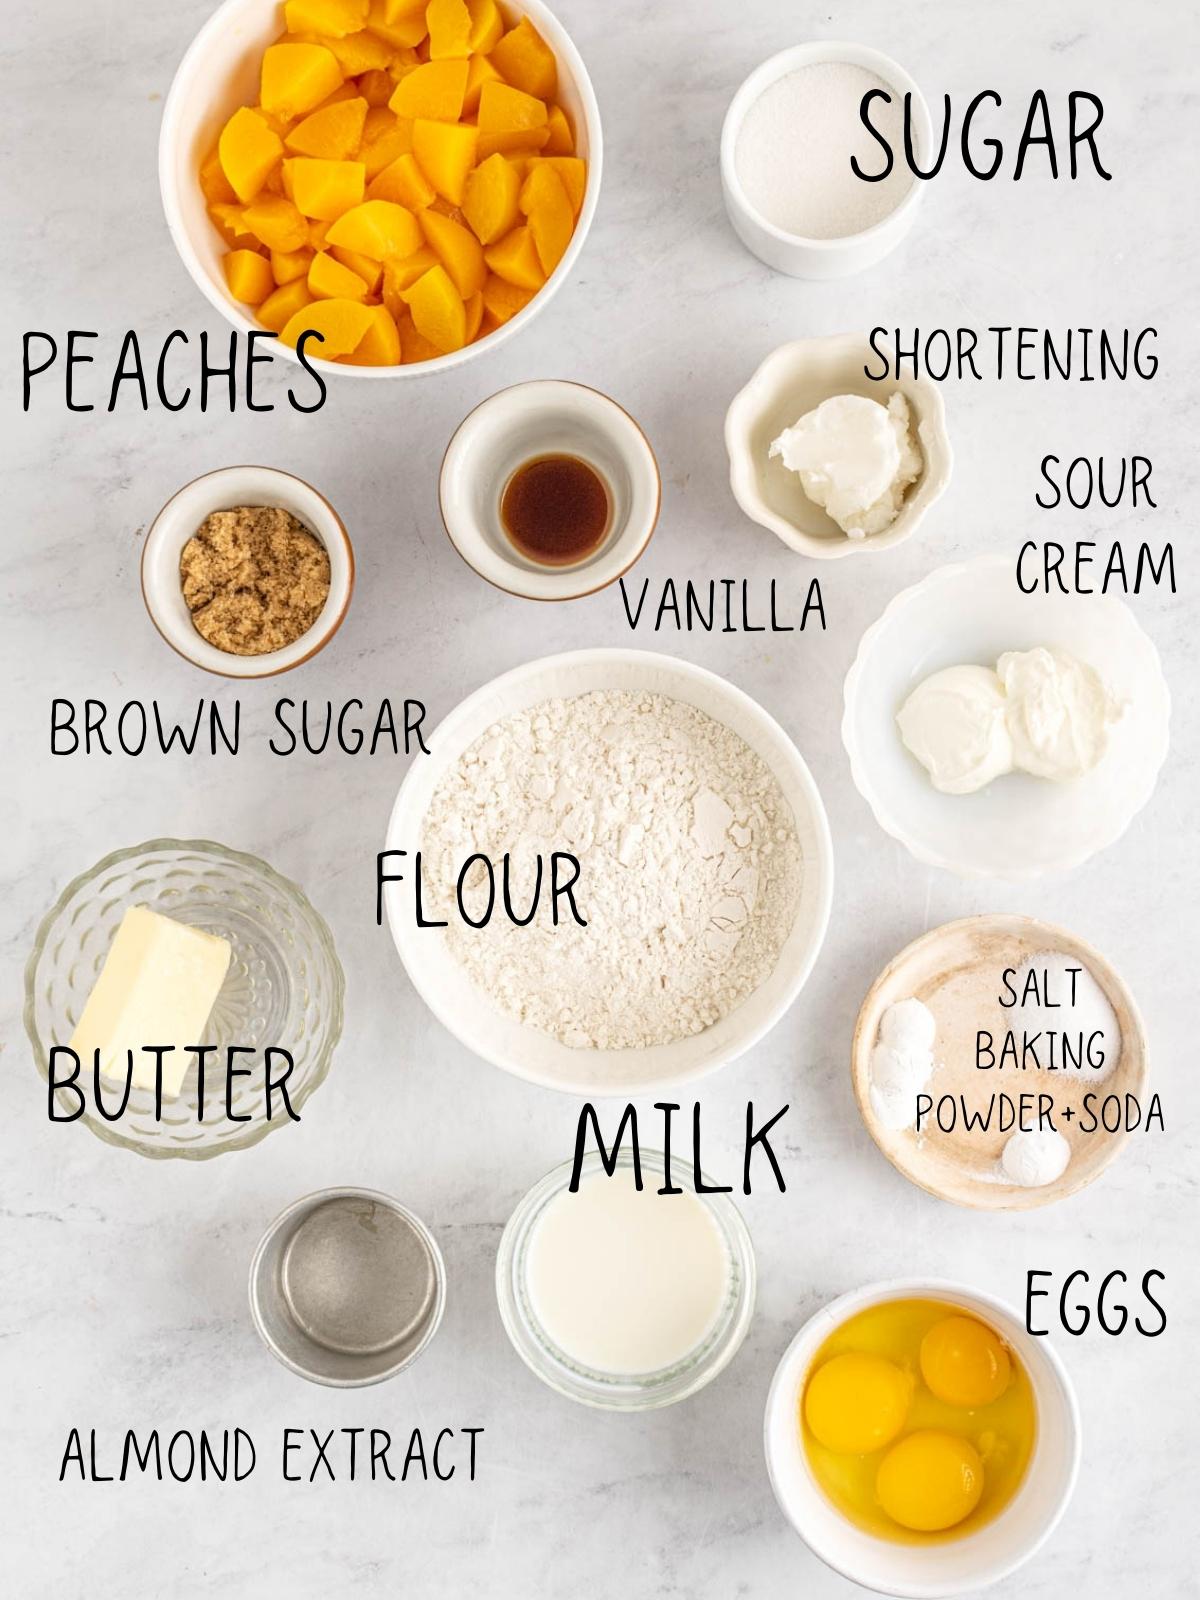 ingredients for peach bread, including milk, salt, eggs, almond extract, butter, flour, Brown sugar, vanilla, sour cream, peaches, and sugar